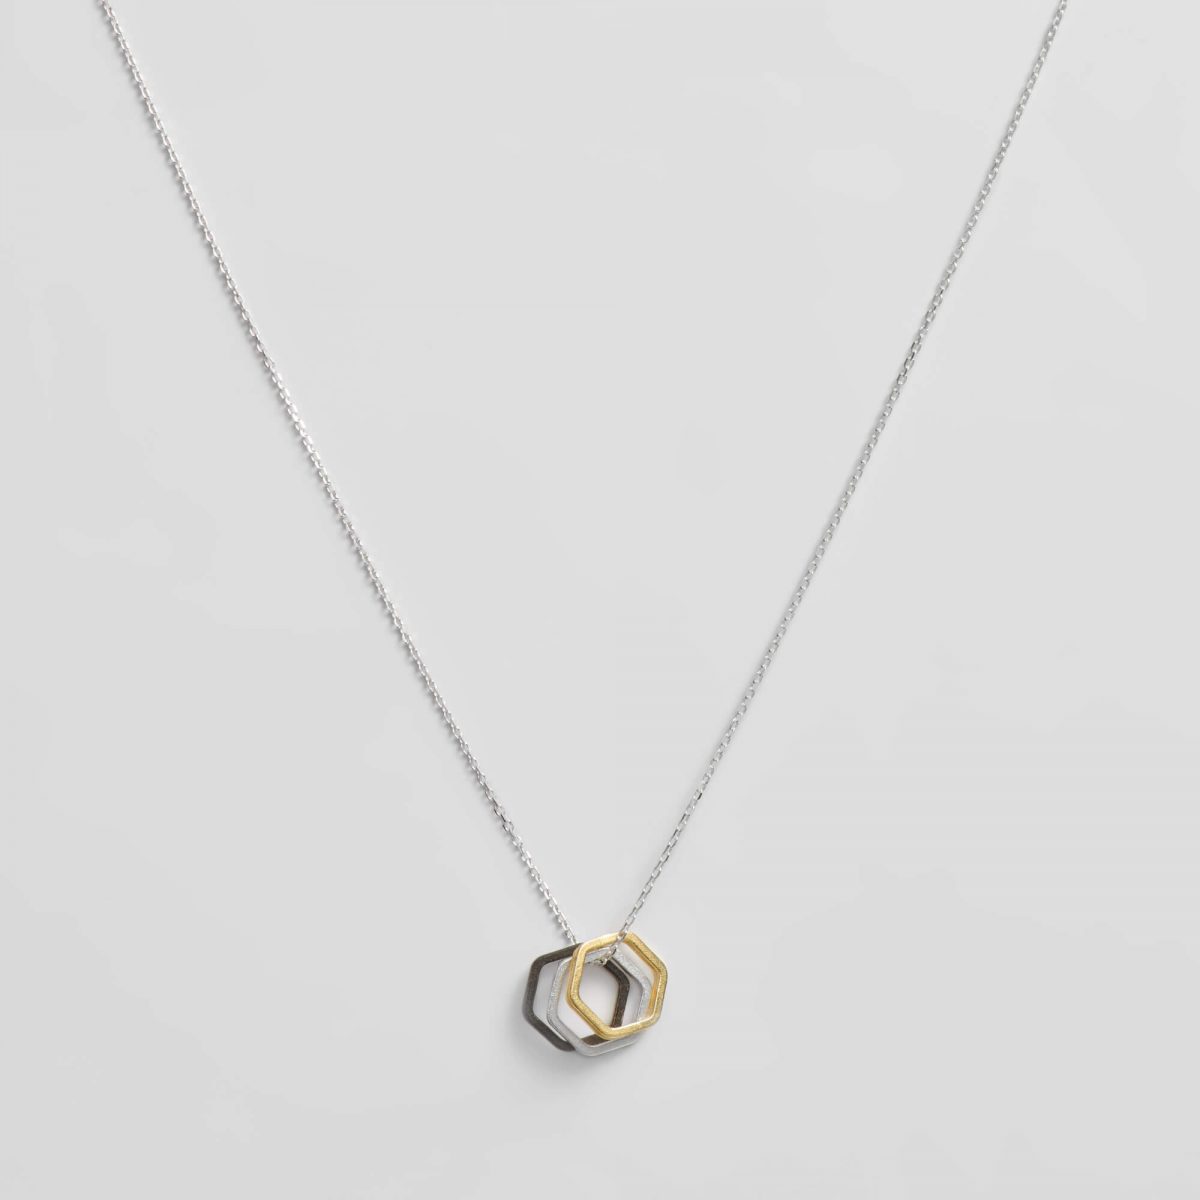 Silver Hexagon Necklace by Xoutou's